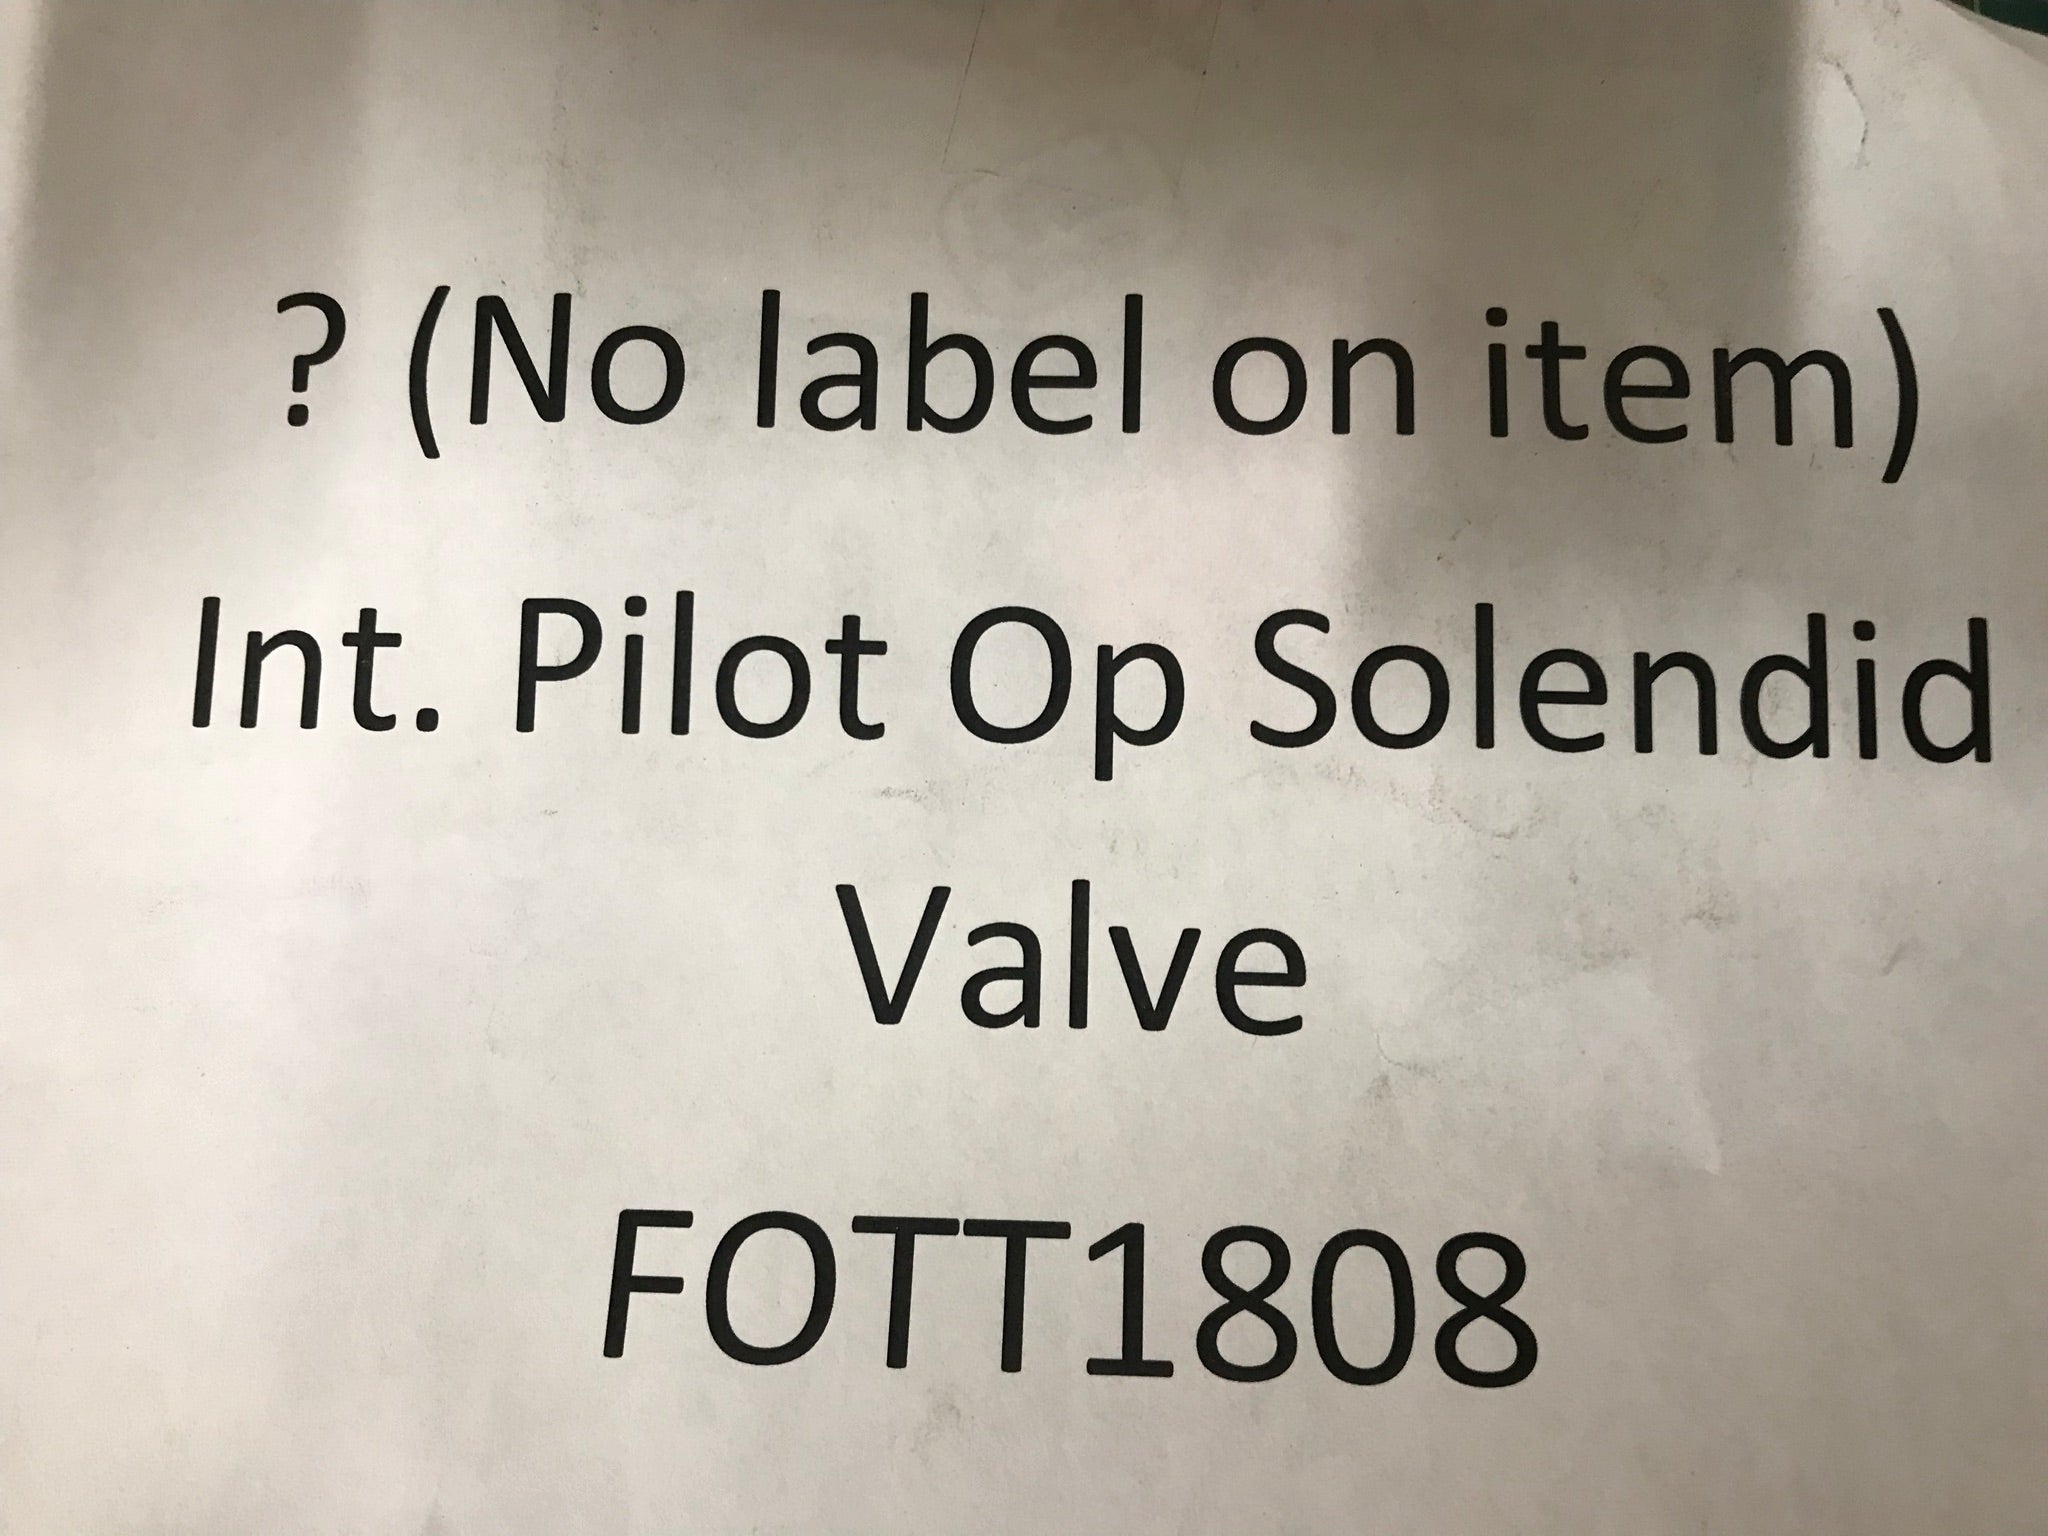 Int. Pilot Op Solendid Valve